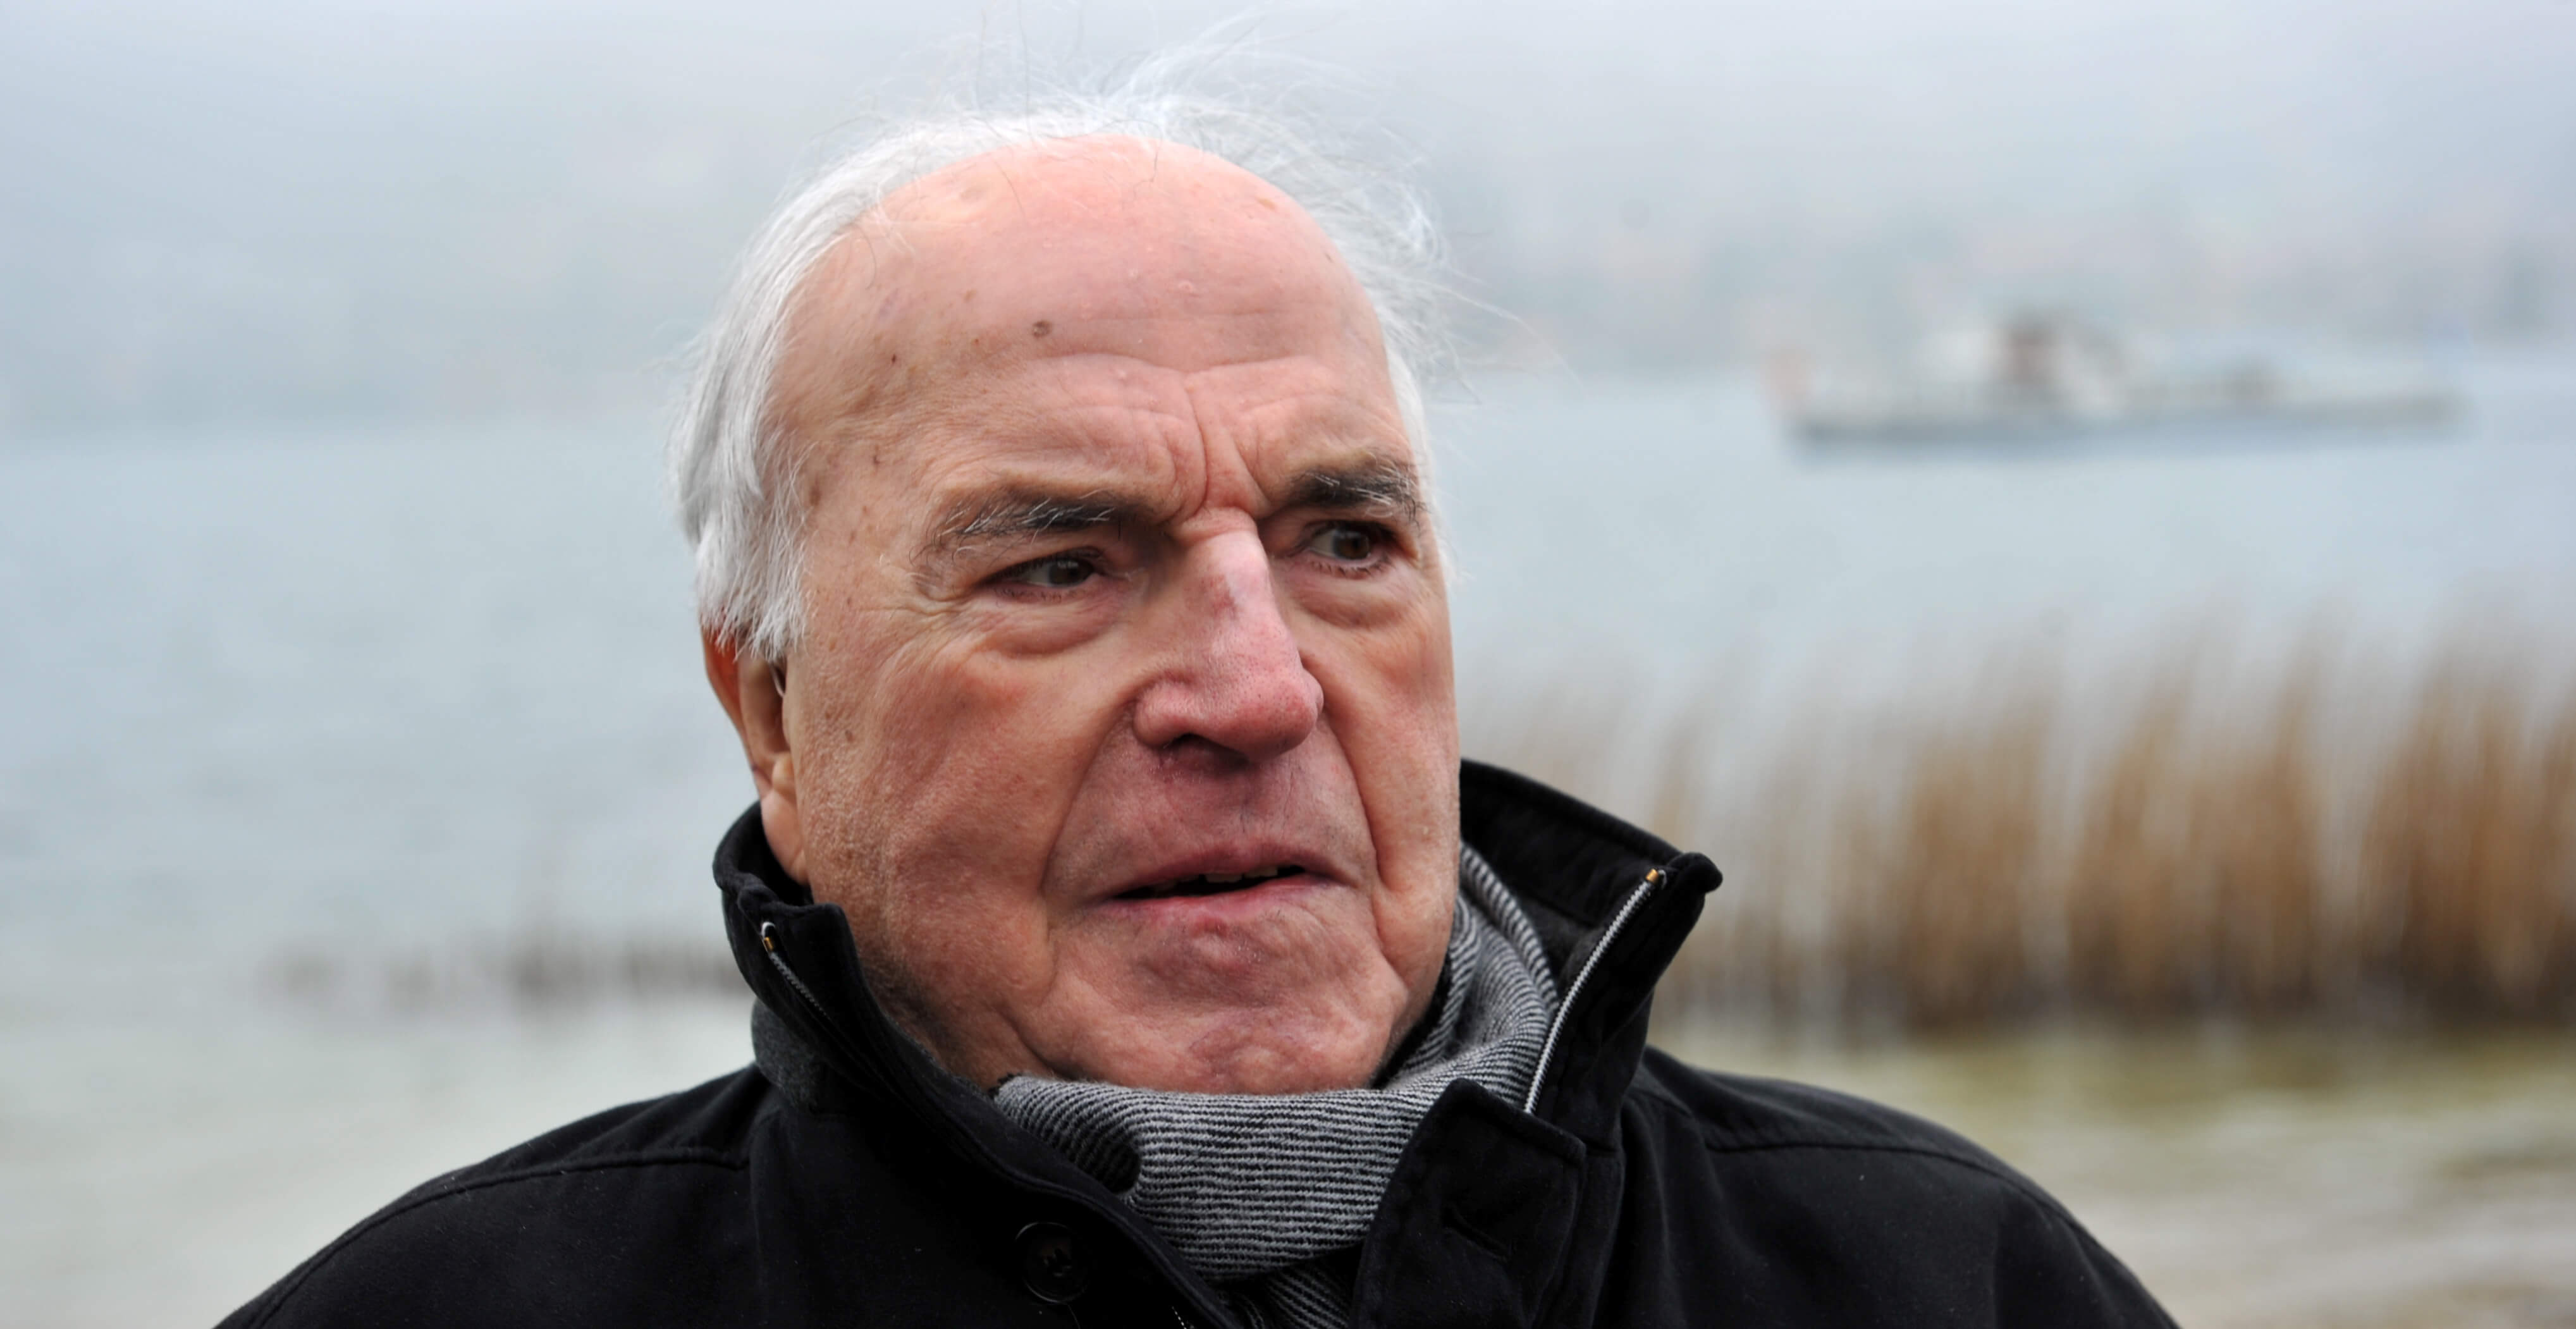 Falleció el excanciller alemán  Helmut Kohl, un líder fuera de serie.